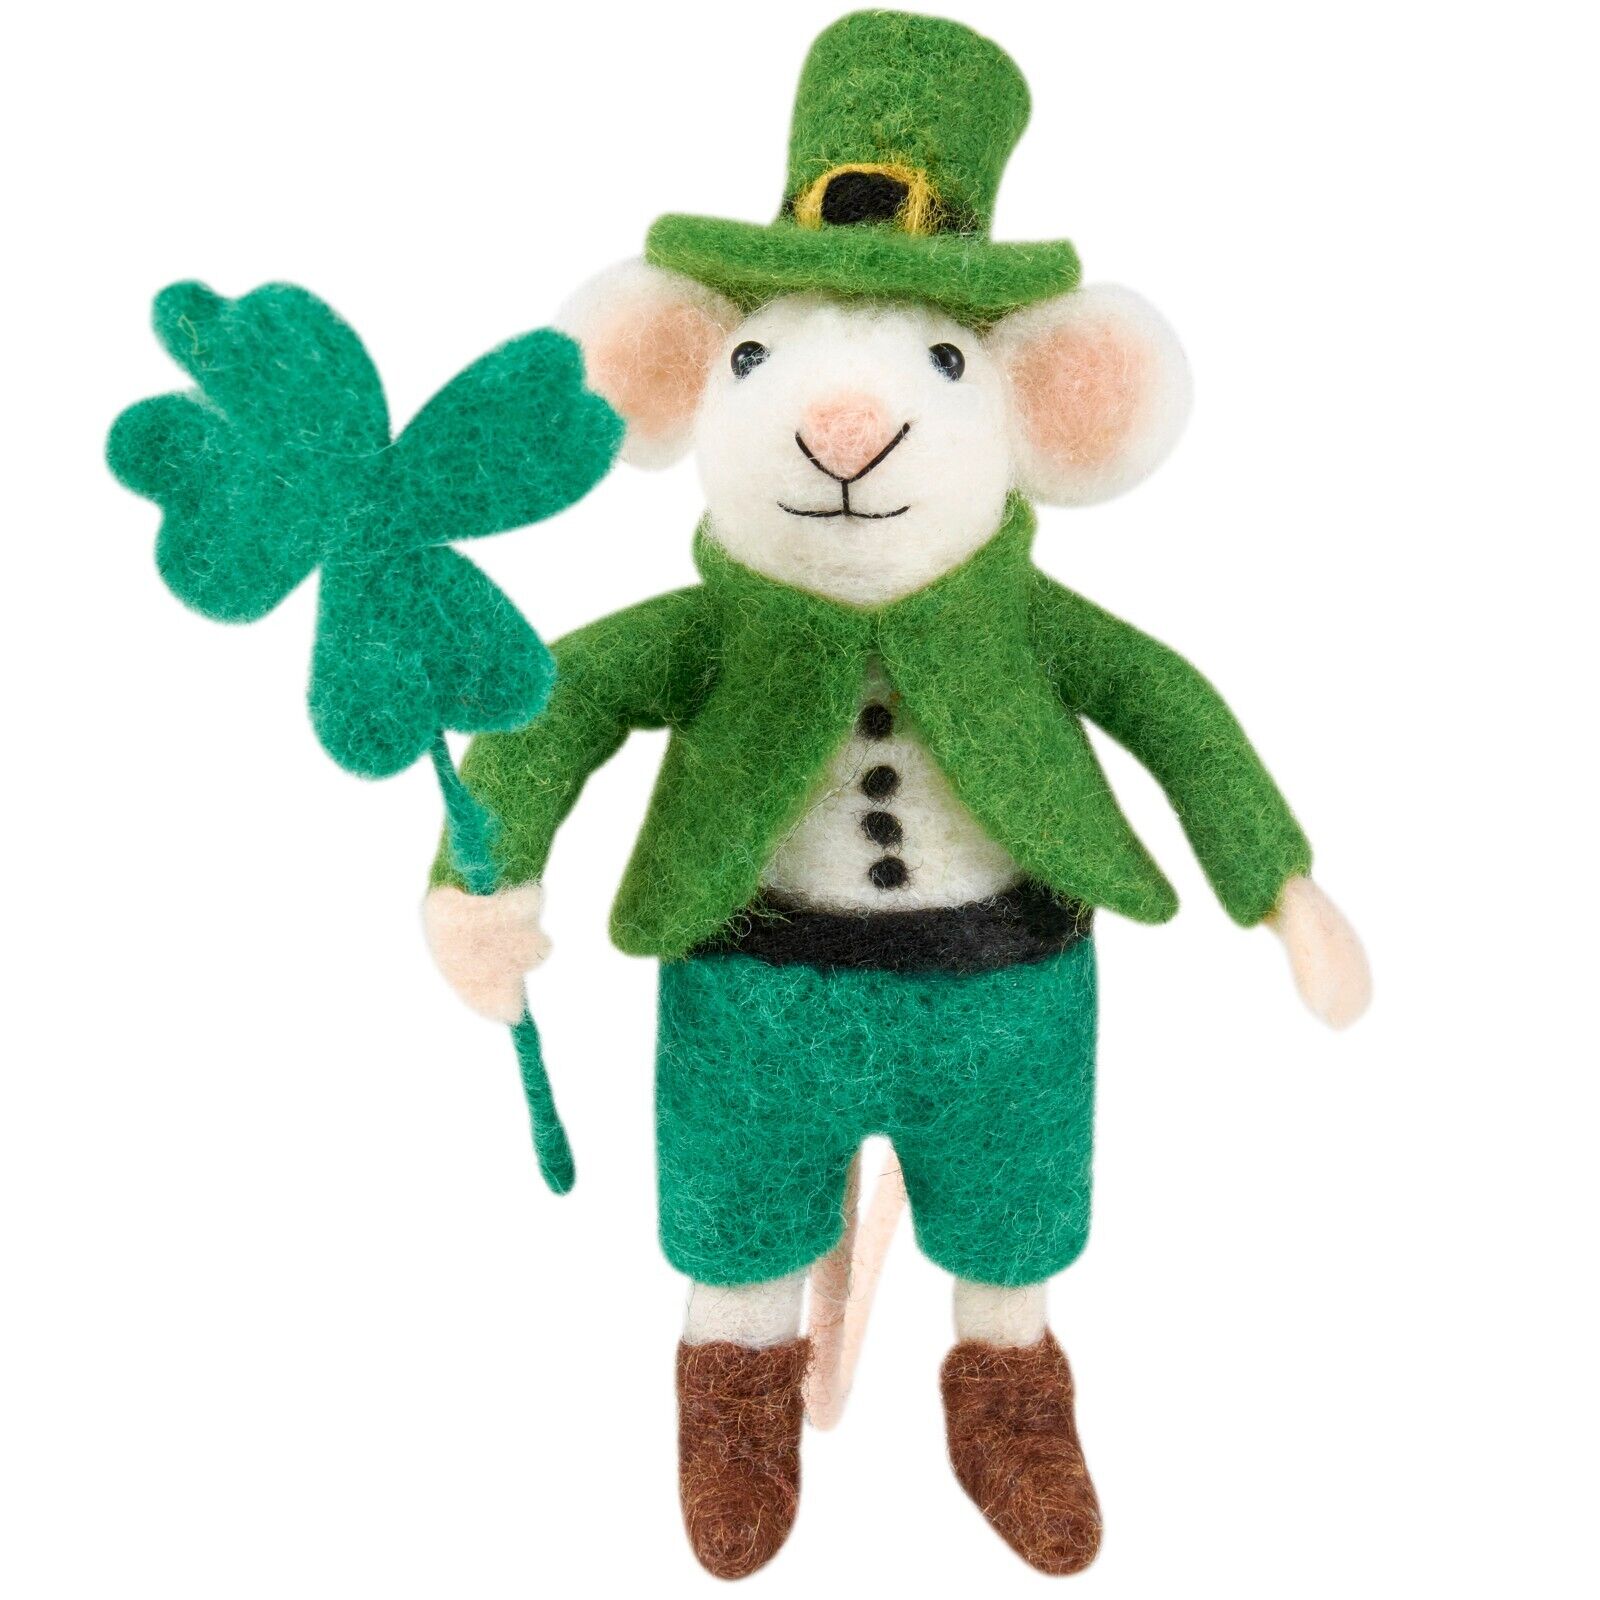 Primitives by Kathy St. Patrick's Day Mouse Felt Critter Gift Leprechaun Decor